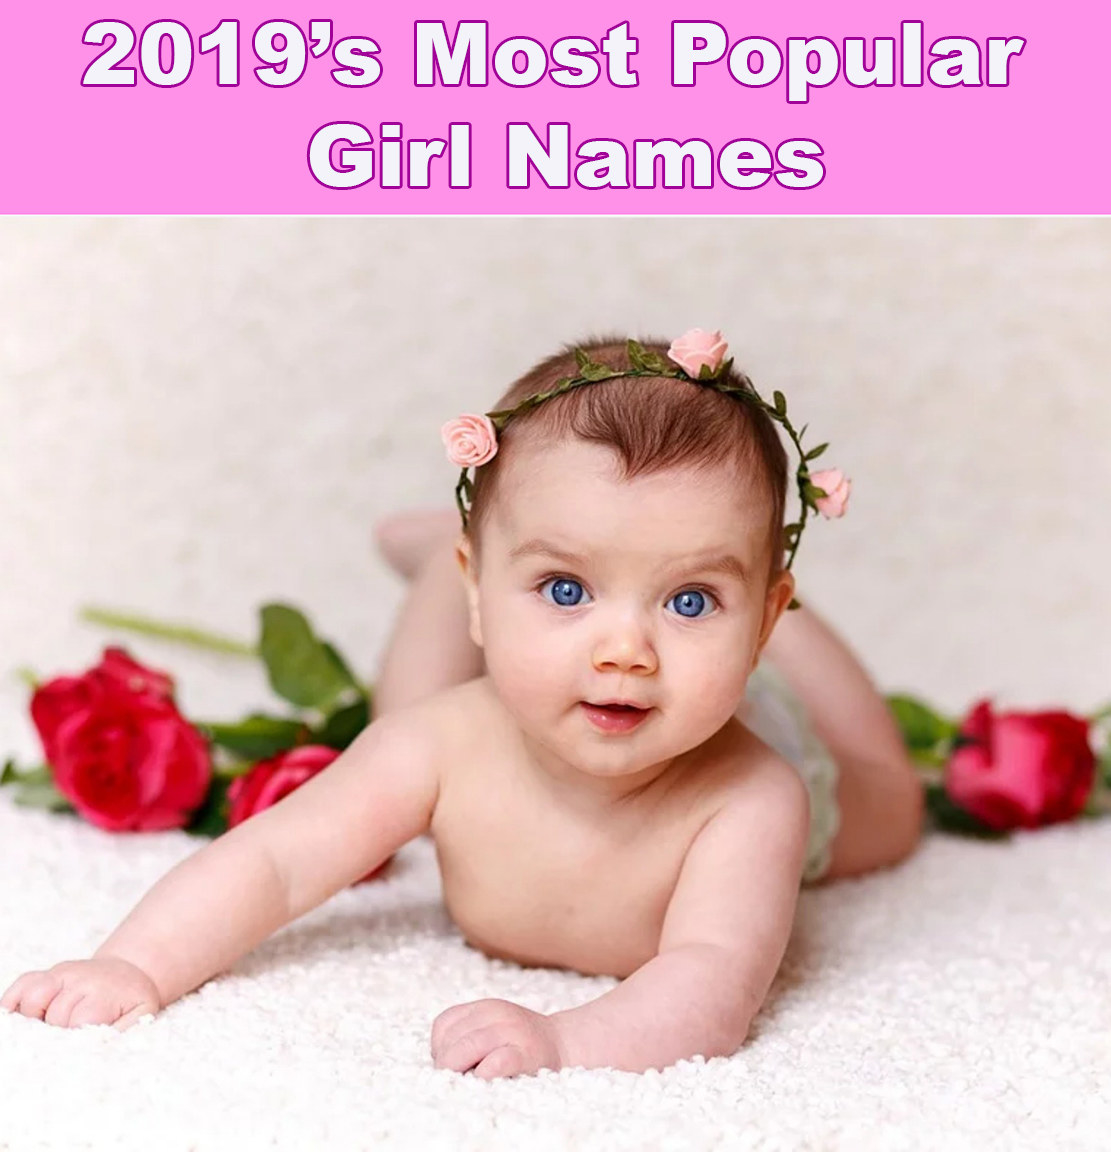 BabyNames.com Announces the Top Names of 2019